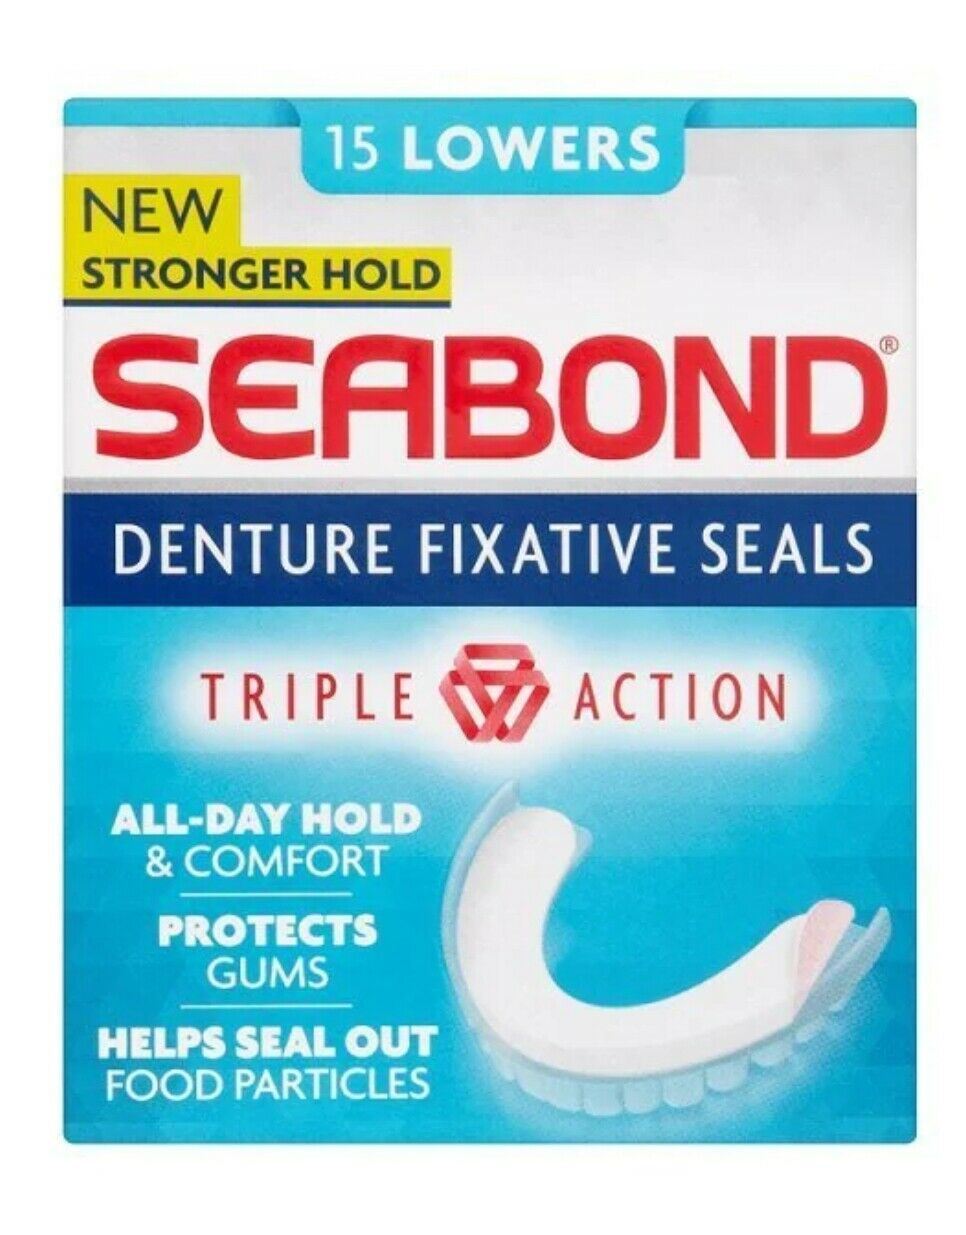 Seabond Denture Fixative Seals - 15 Original Lowers